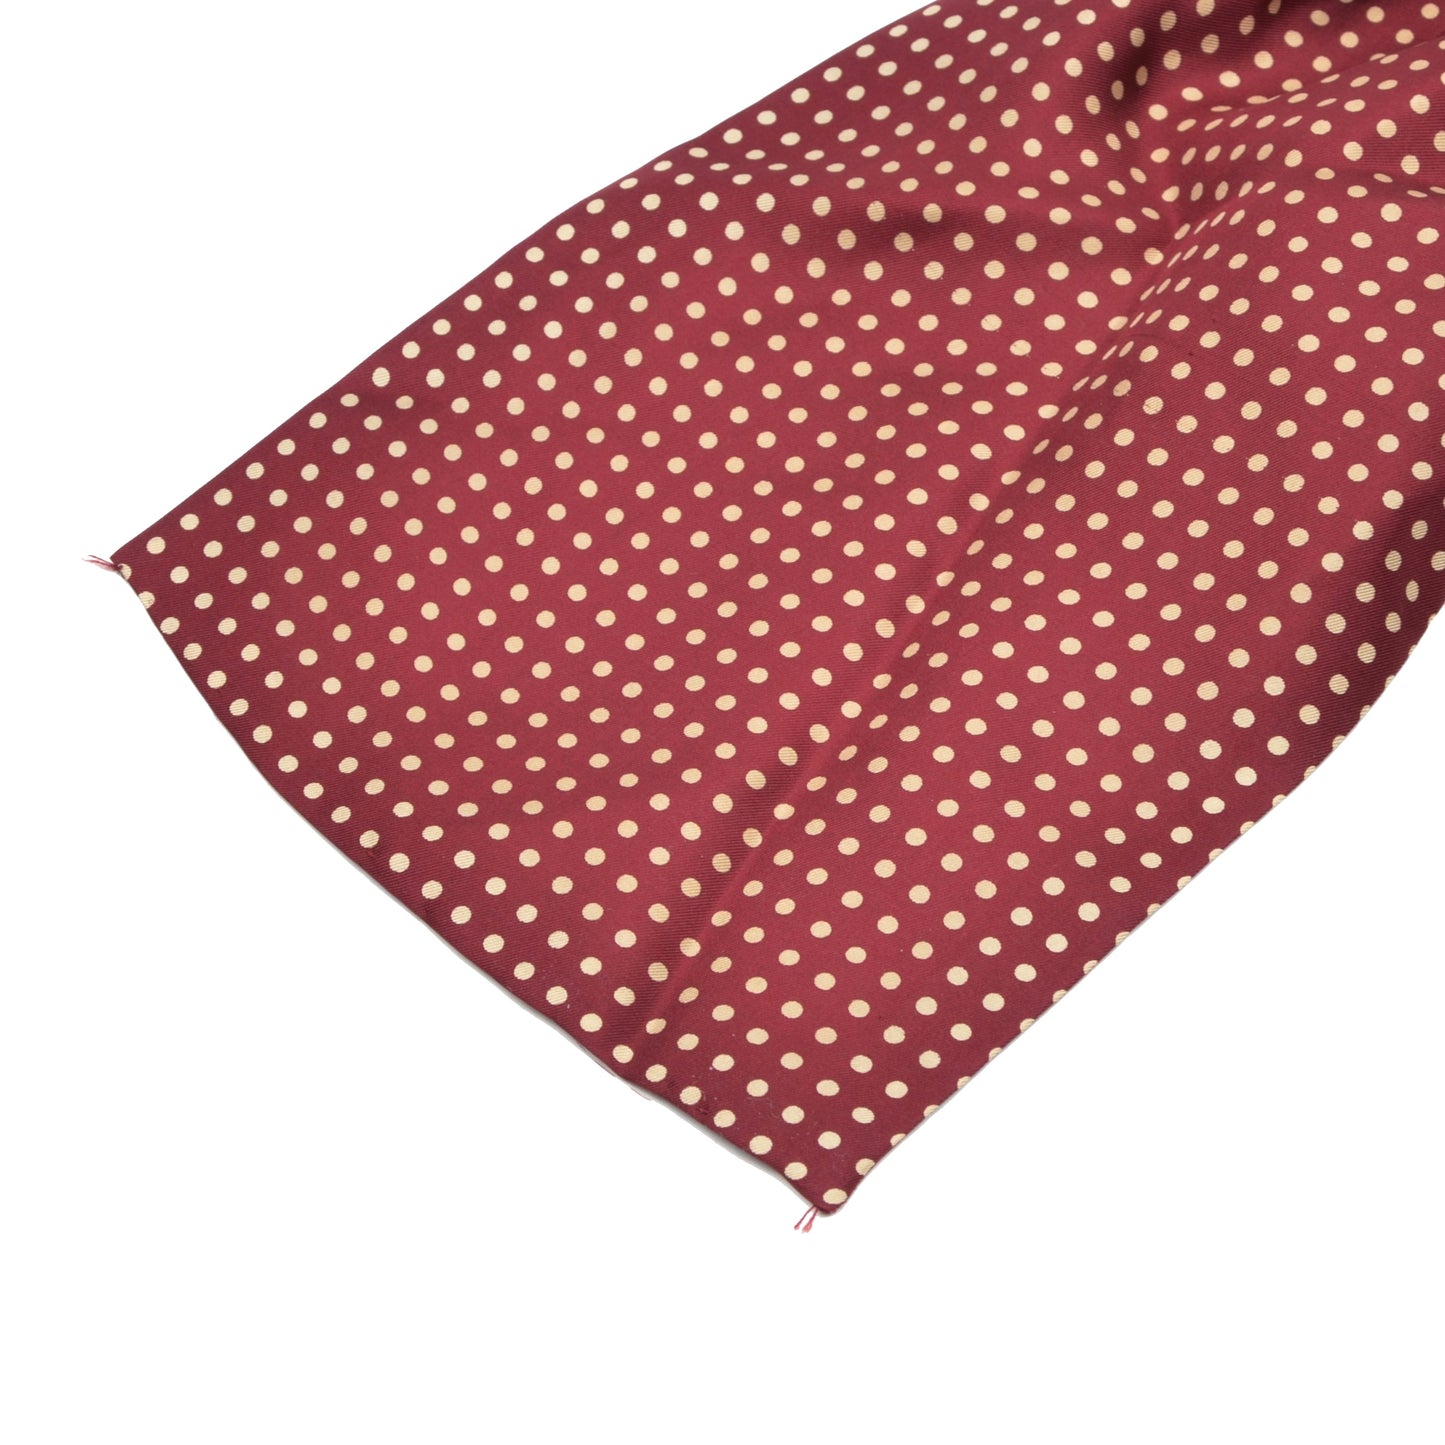 Silk Ascot/Cravatte Tie - Burgundy Polka Dot